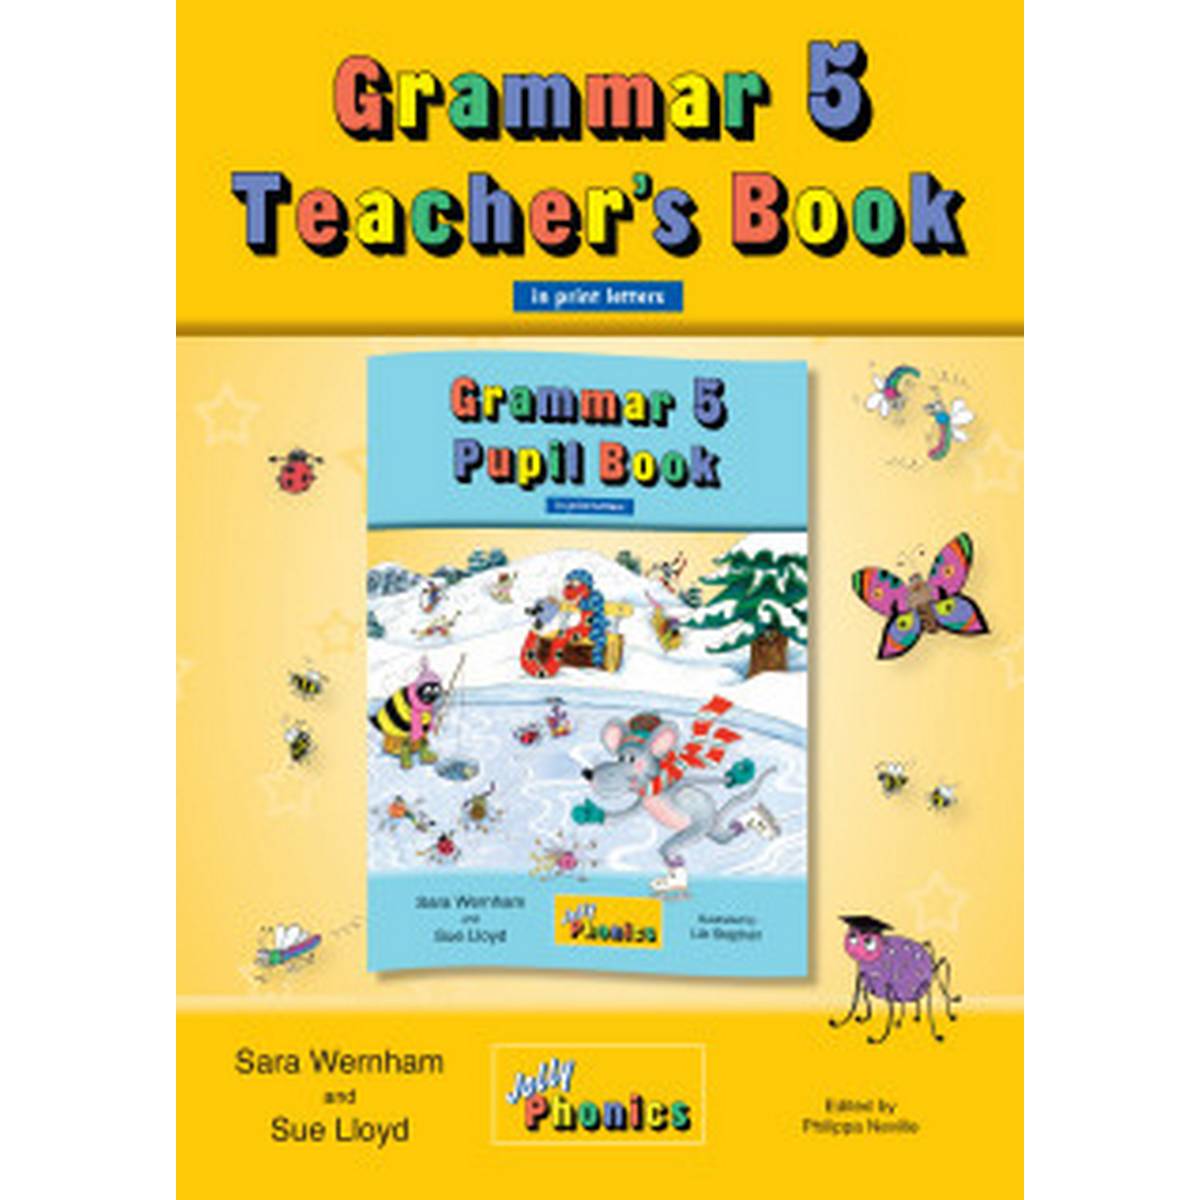 Jolly Grammar 5 Teacher’s Book (In Print Letters)